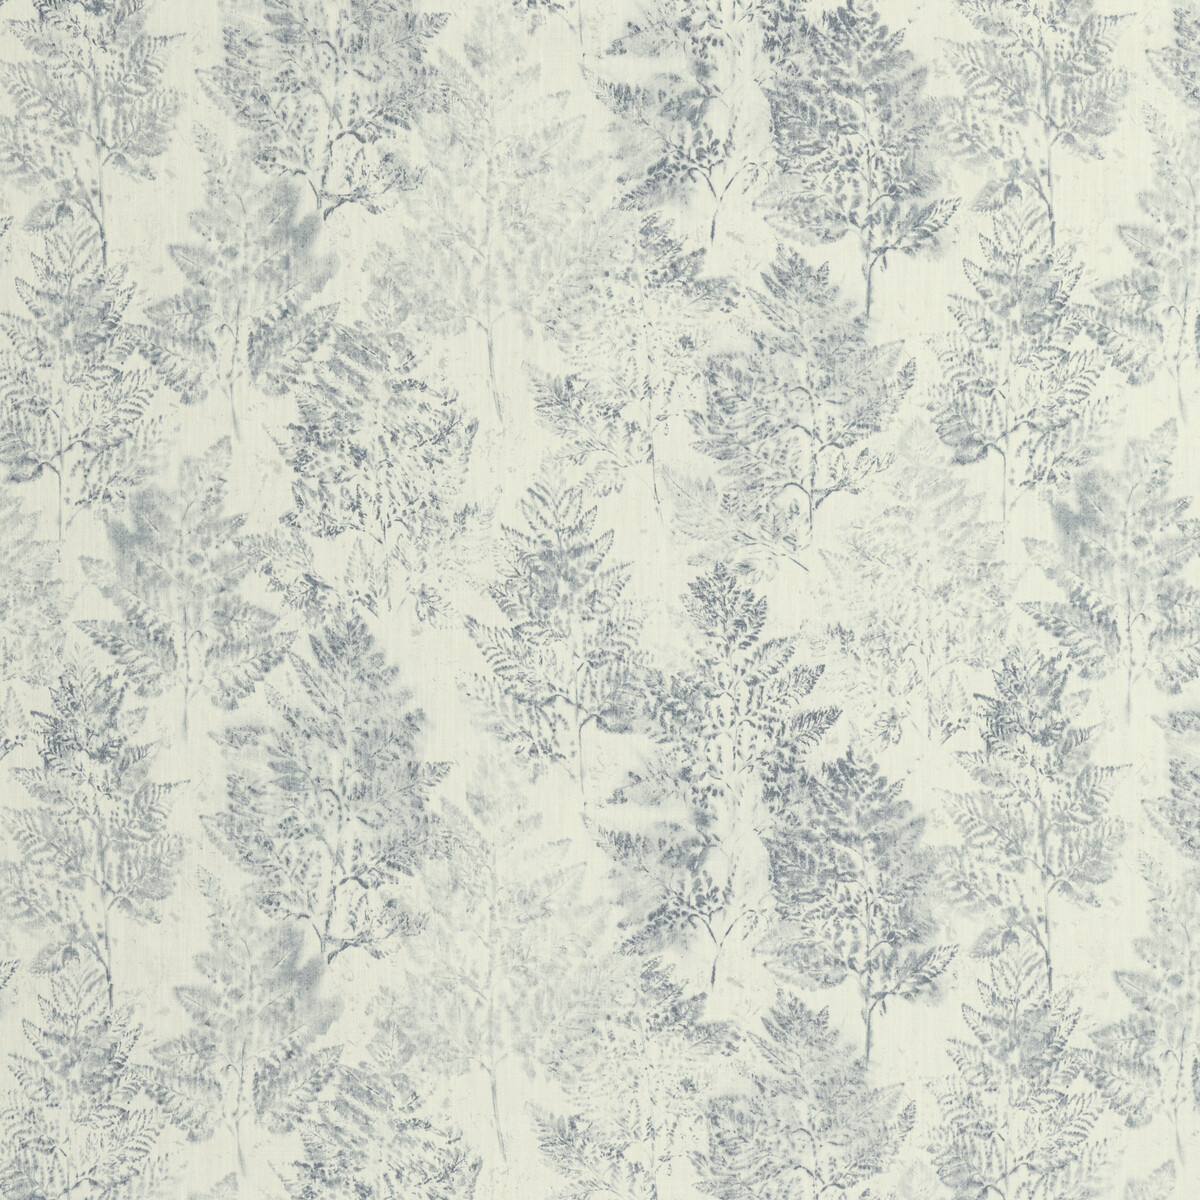 Kravet Basics Heiki Fern.11.0 Heiki Fern Multipurpose Fabric in Silver/White/Grey